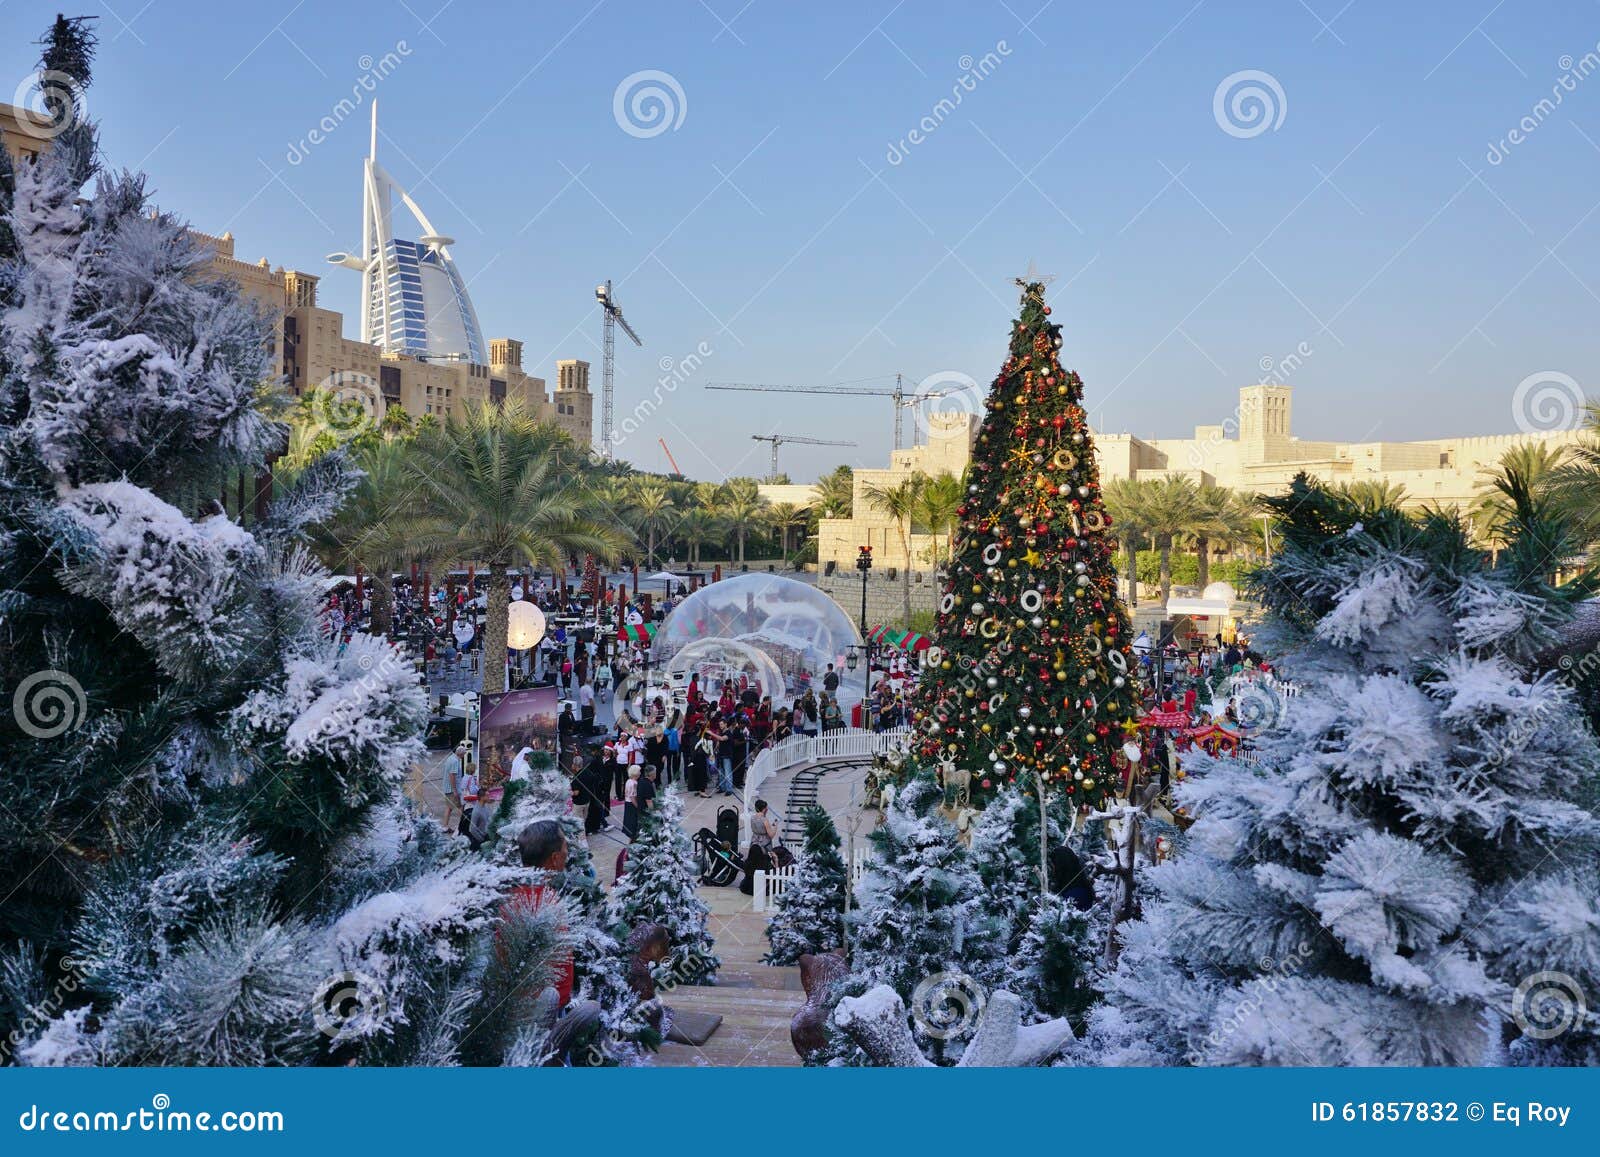 Christmas Decorations and Tree online in Dubai 2021 | YATAI